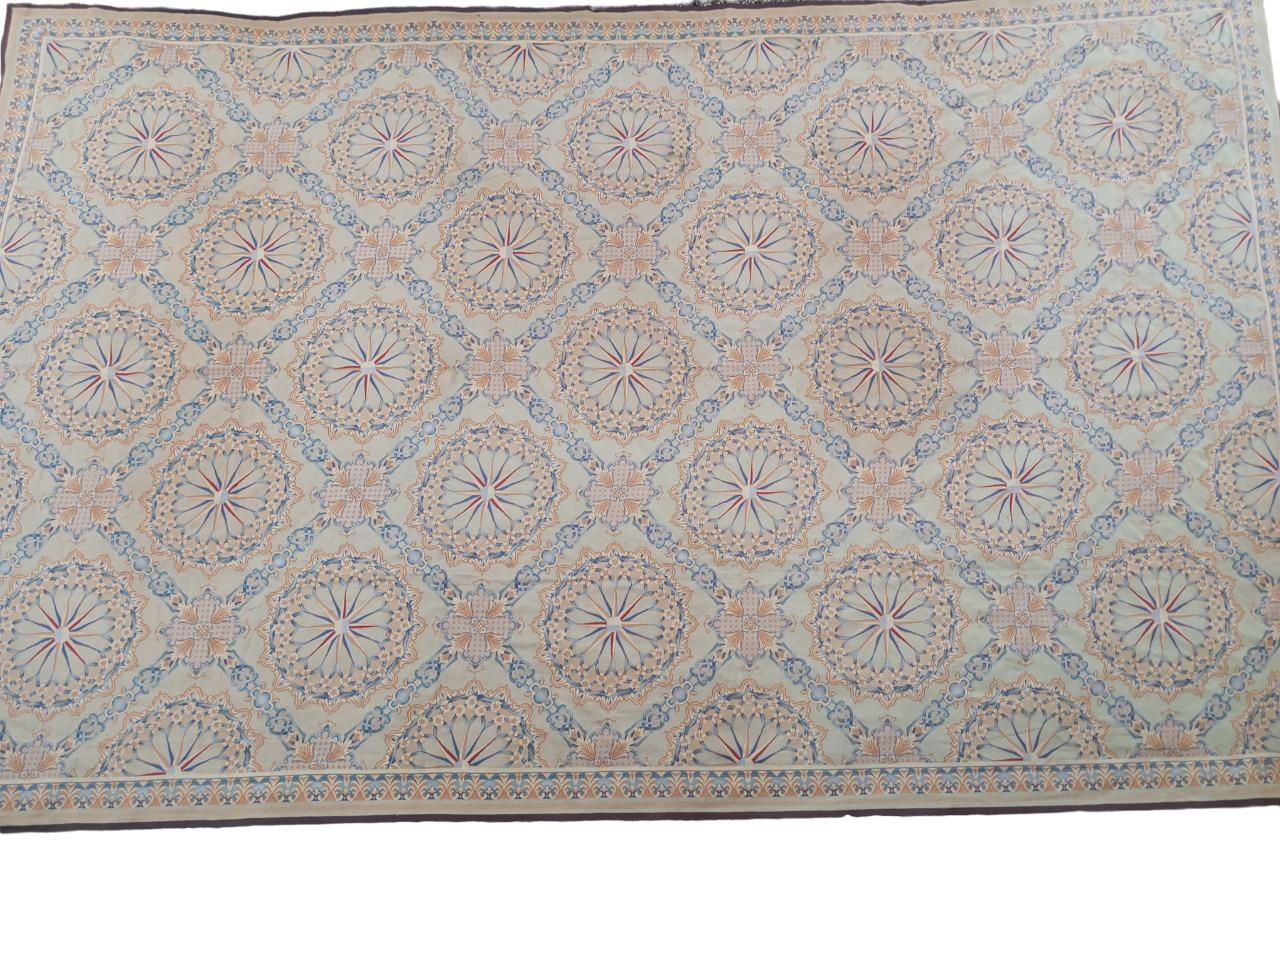 Großer Nadelspitze-Teppich 670x 430 cm.  Vintage-Stil „Frankreichstil“ (1980)   (Wolle) im Angebot